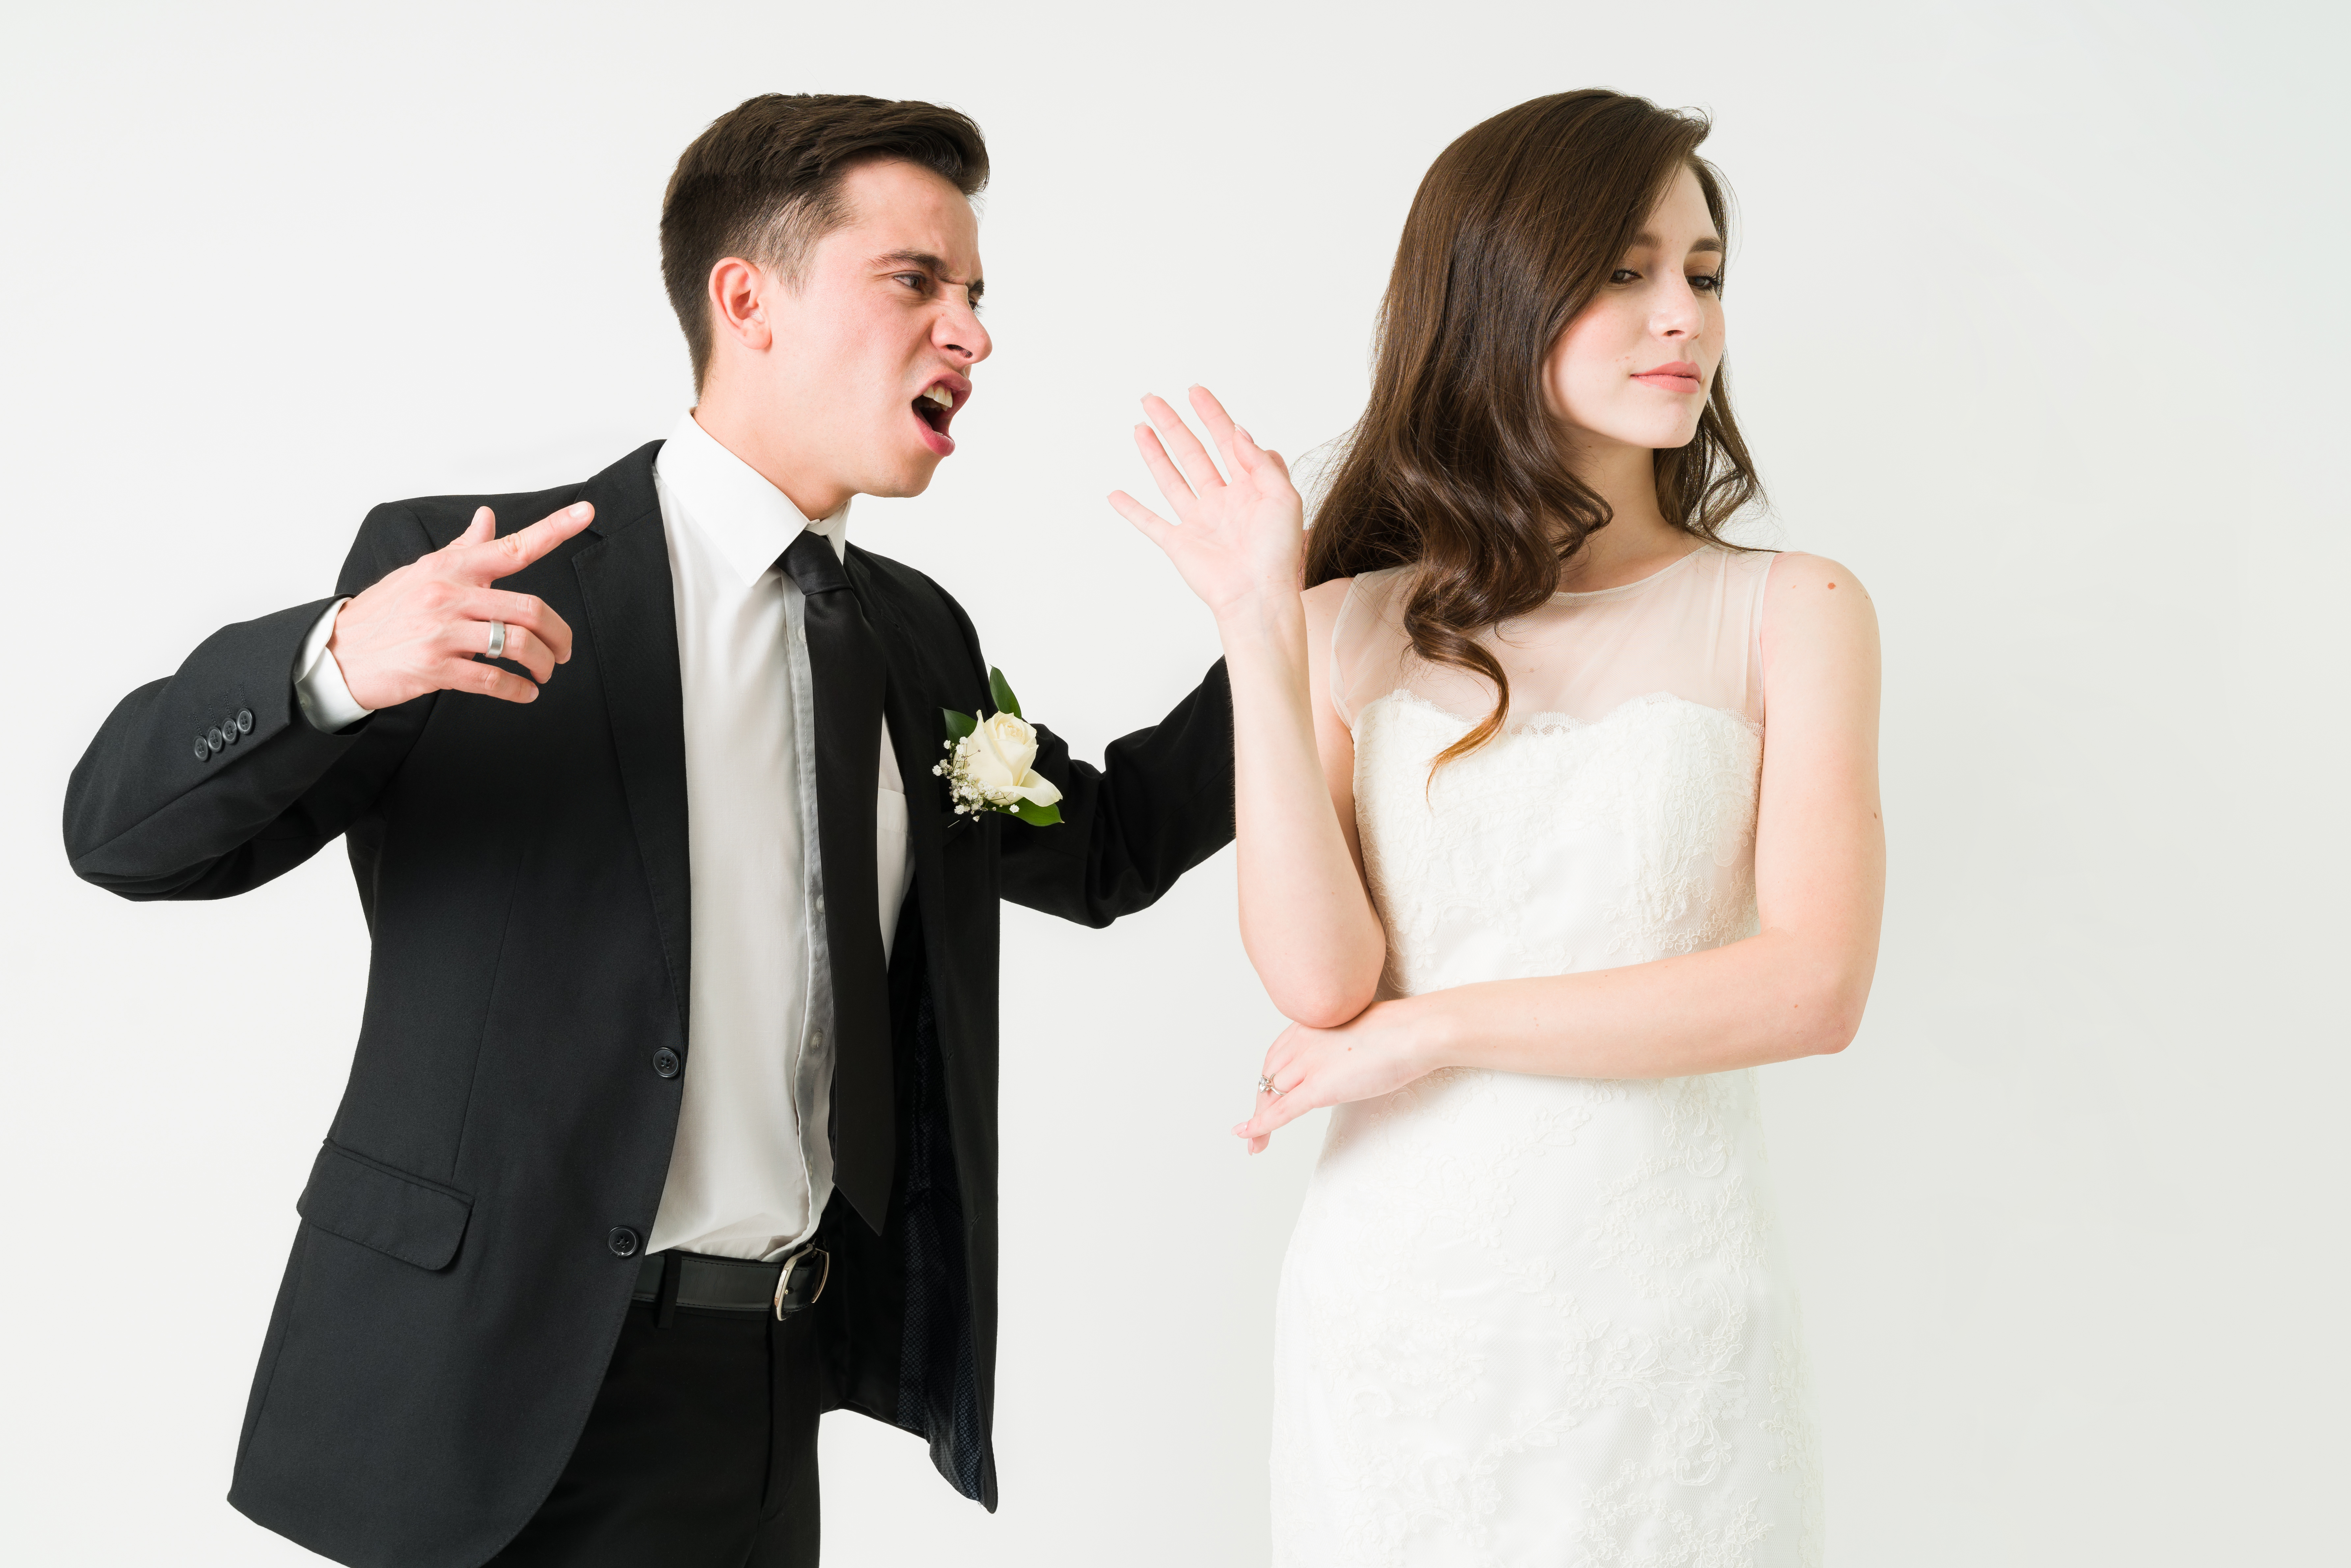 Groom shouting at bride | Source: Shutterstock